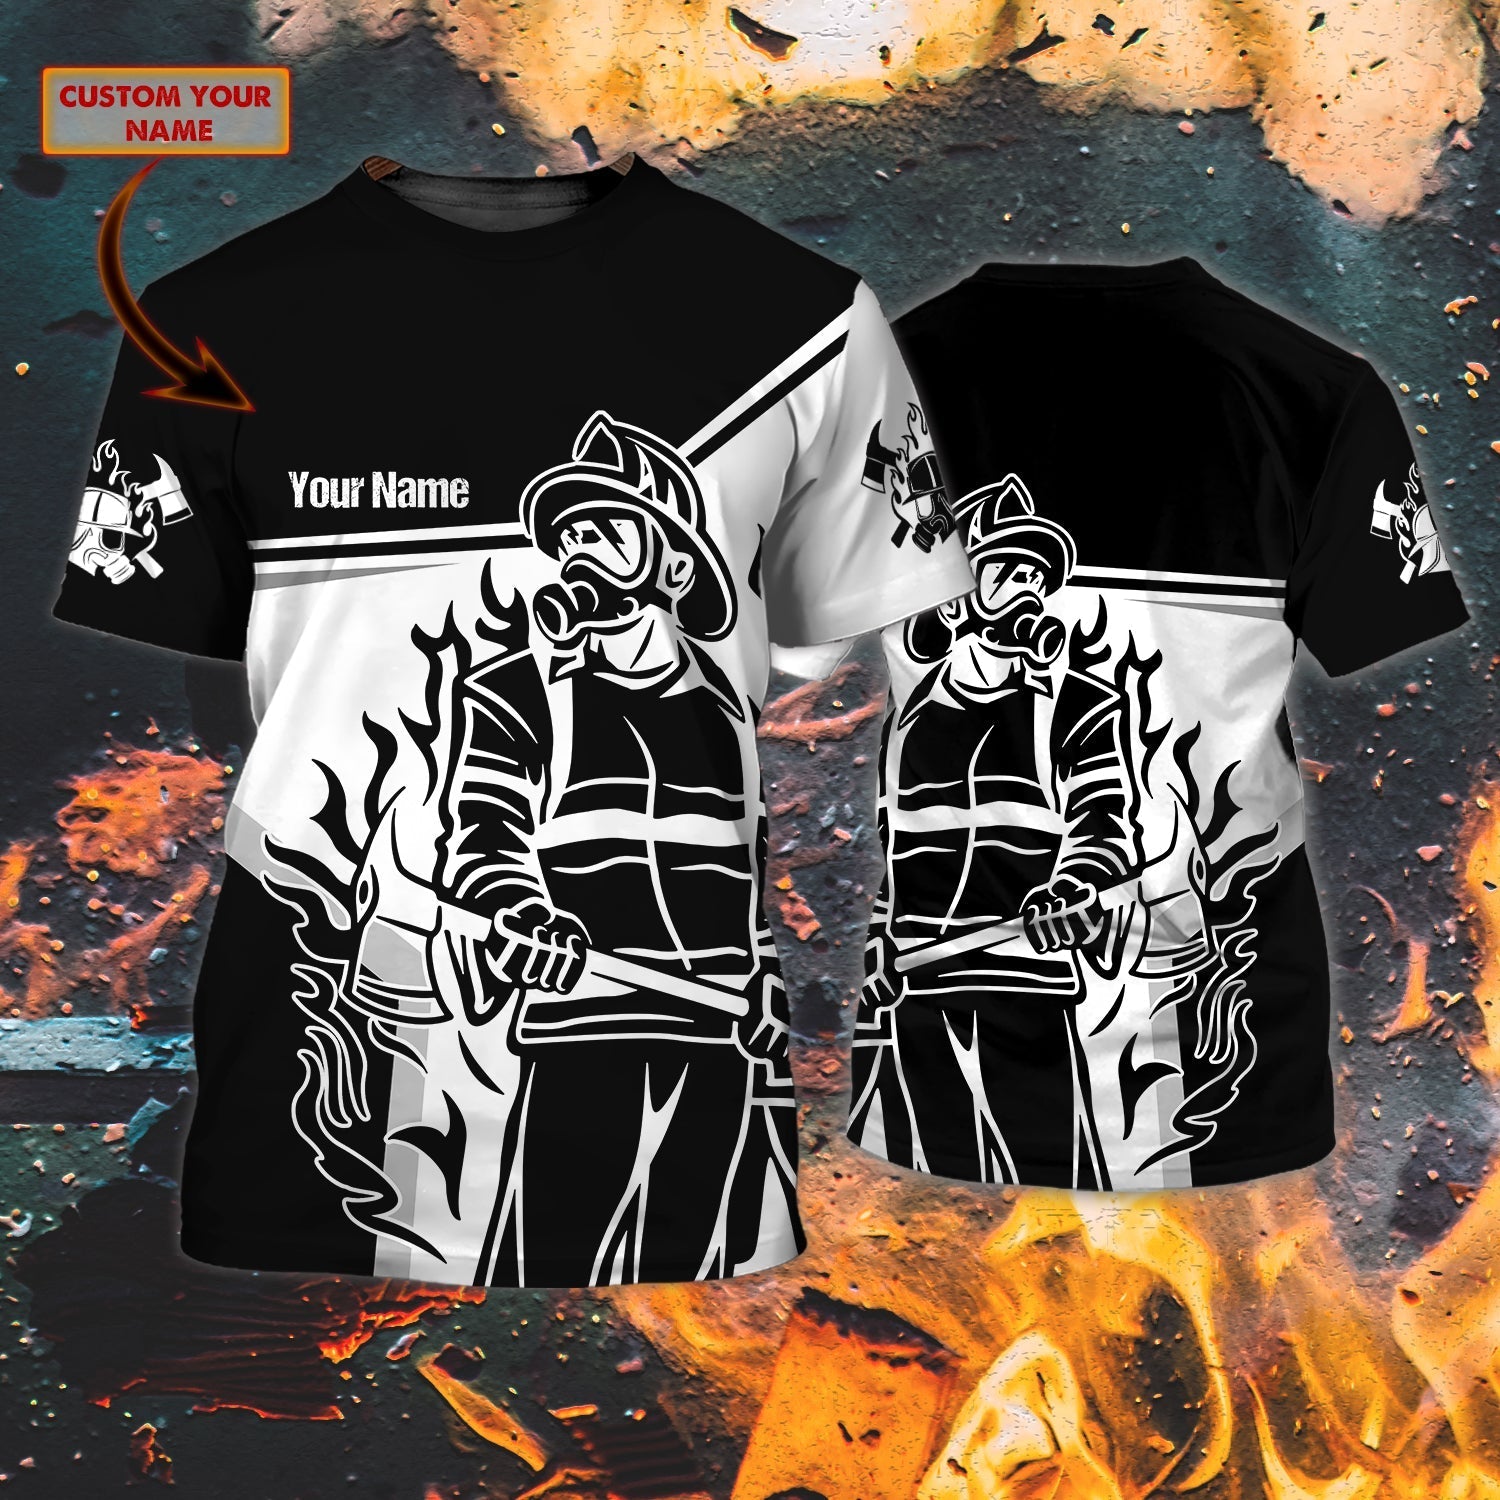 Custom Name Black Sublimation Fire Men Shirt/ Firefighter Job T Shirt/ Firefighter Husband Gifts